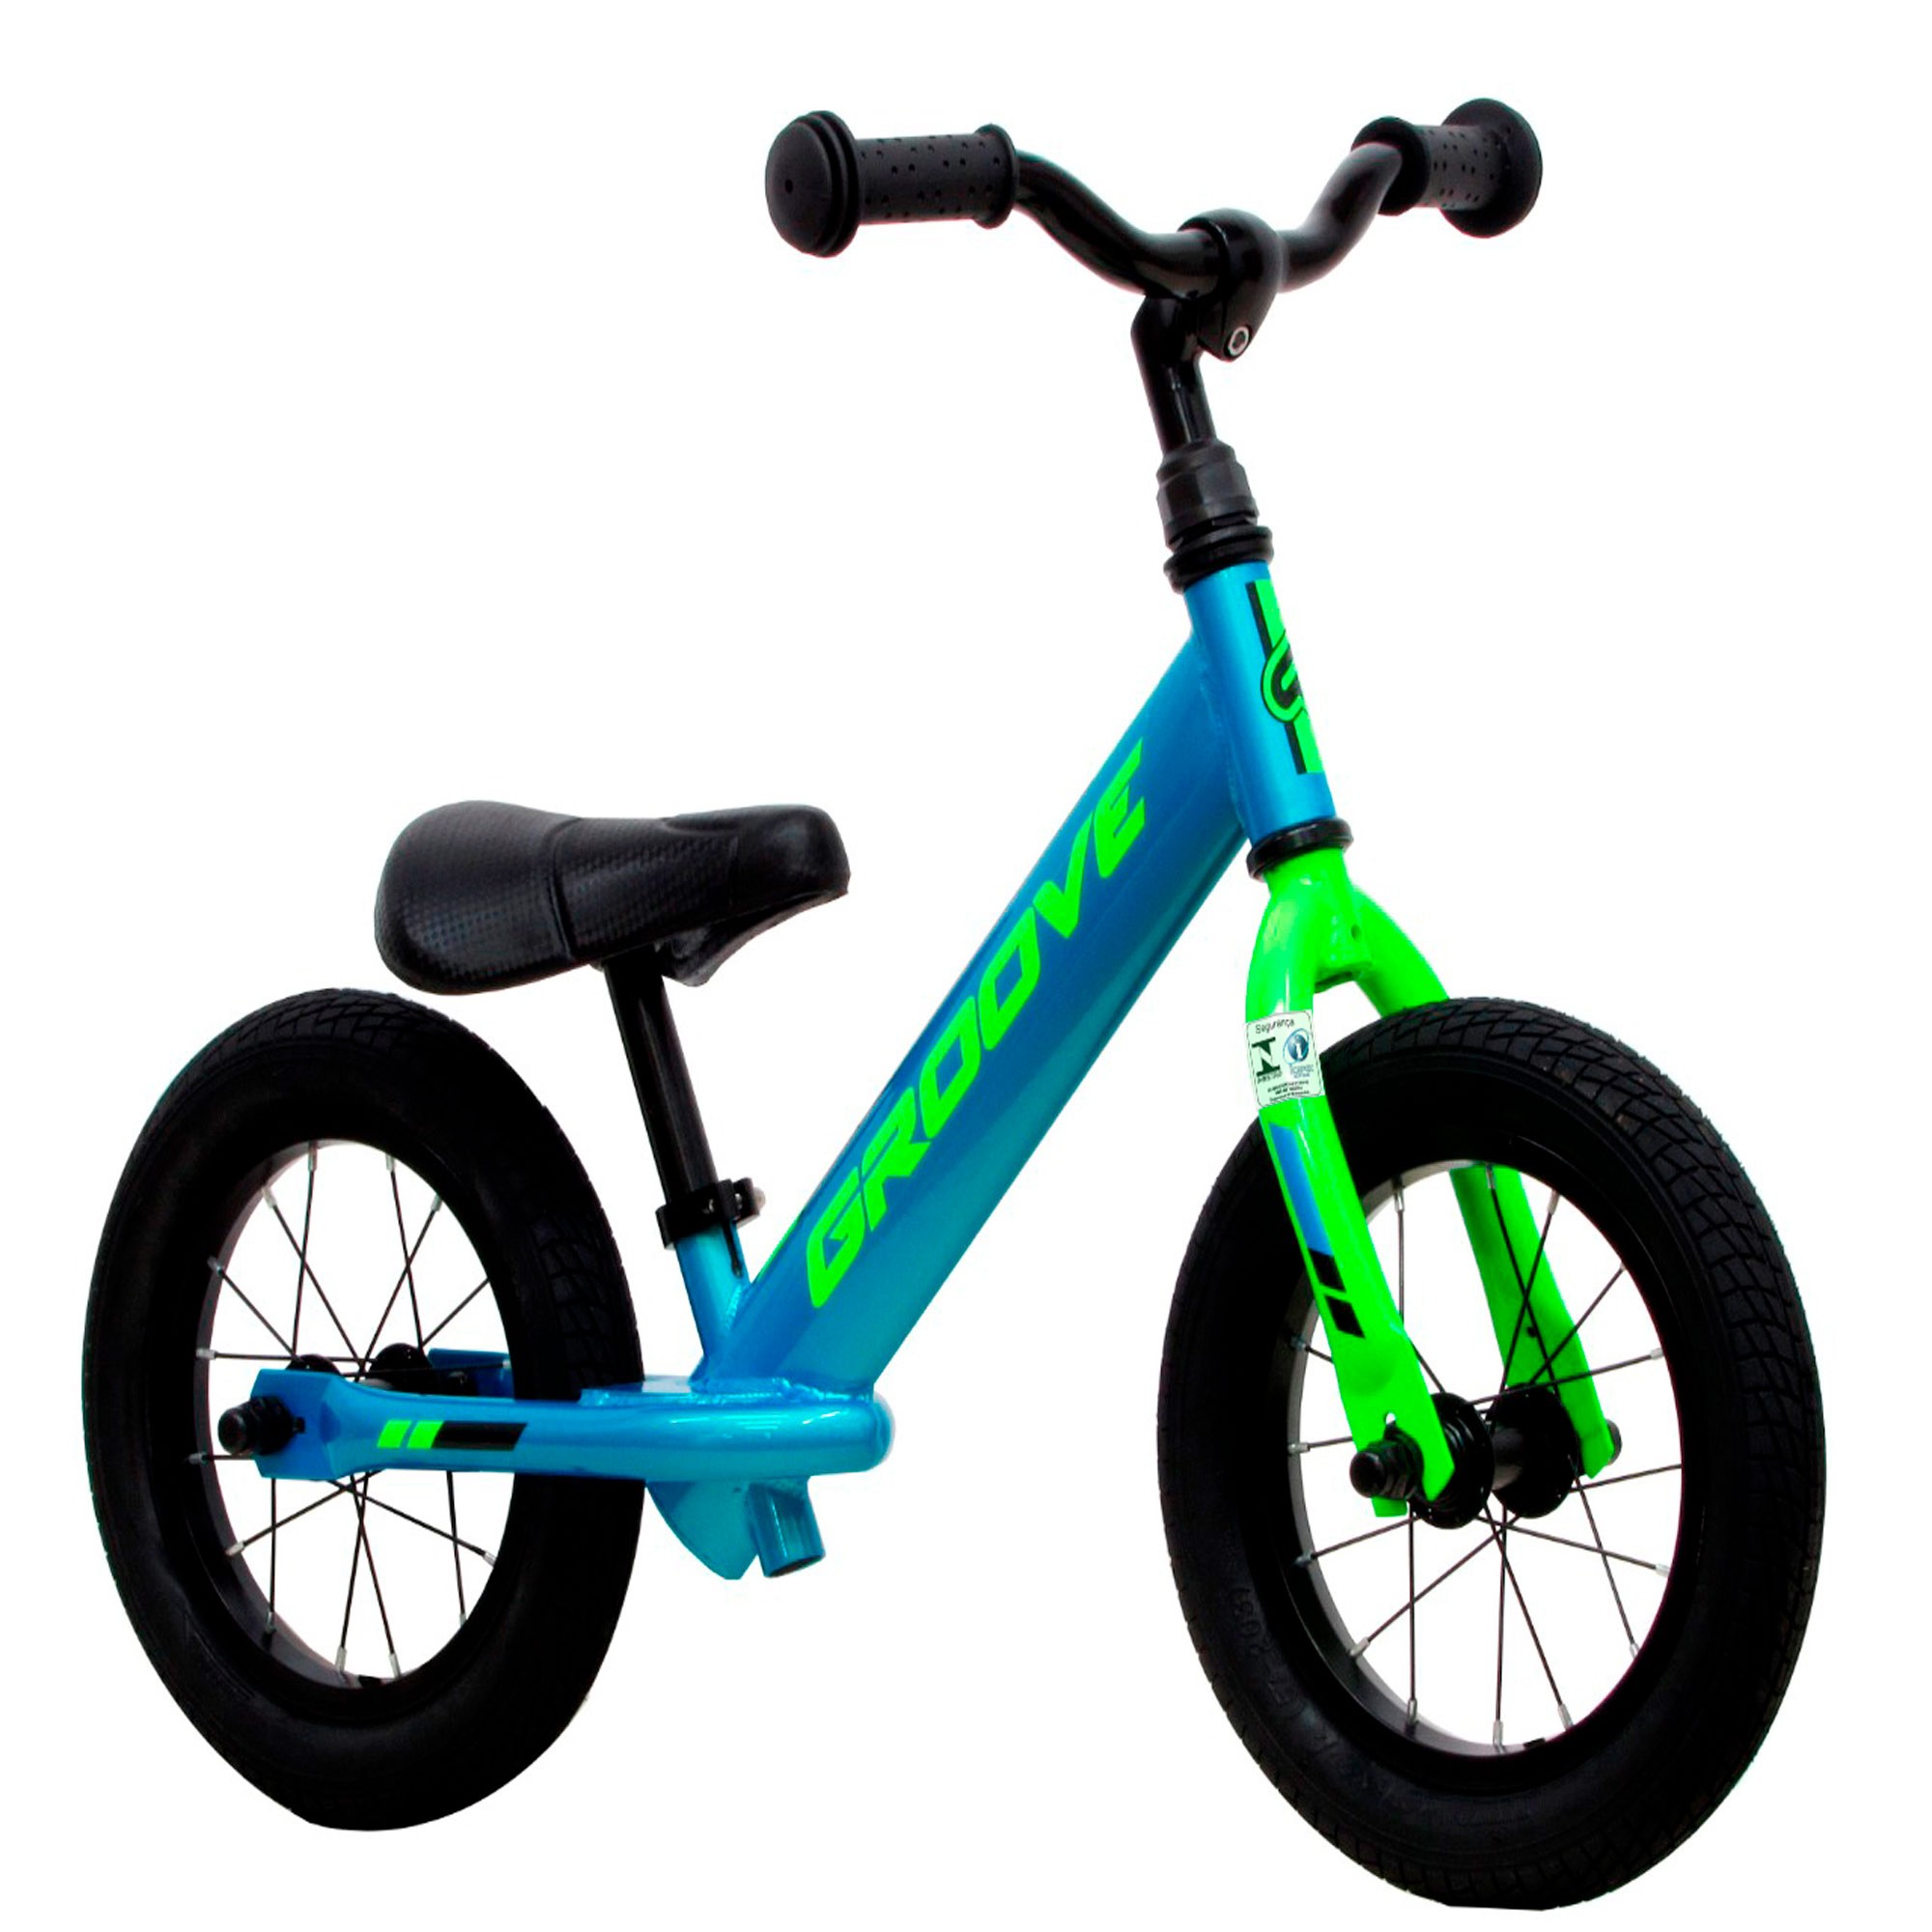 Bicicleta infantil Groove Balance aro 12